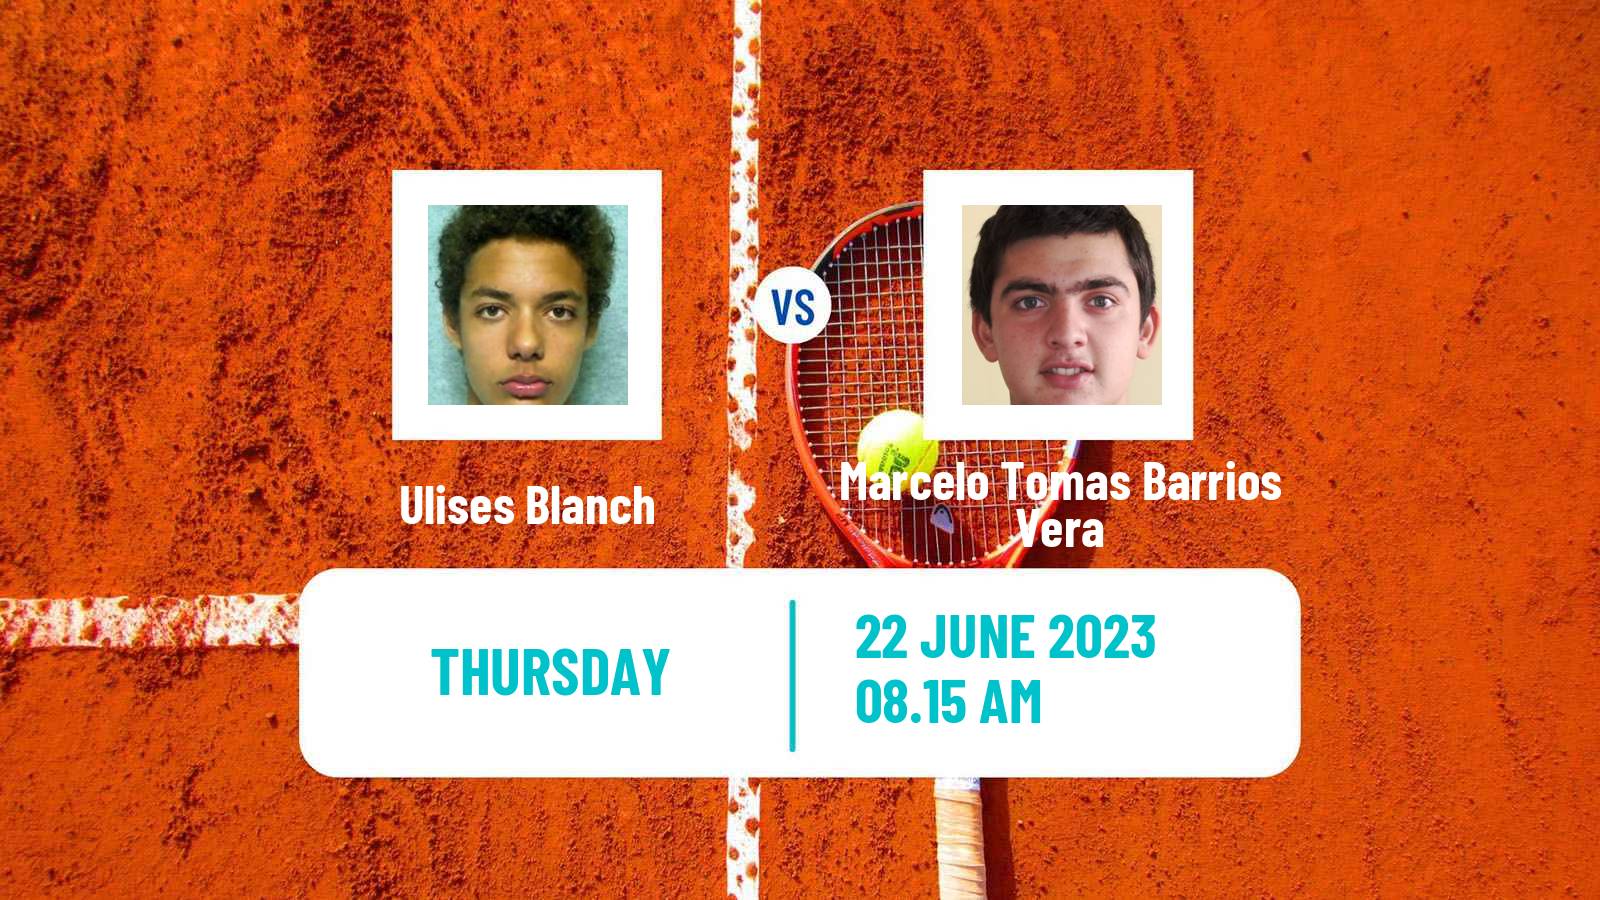 Tennis Poznan Challenger Men Ulises Blanch - Marcelo Tomas Barrios Vera